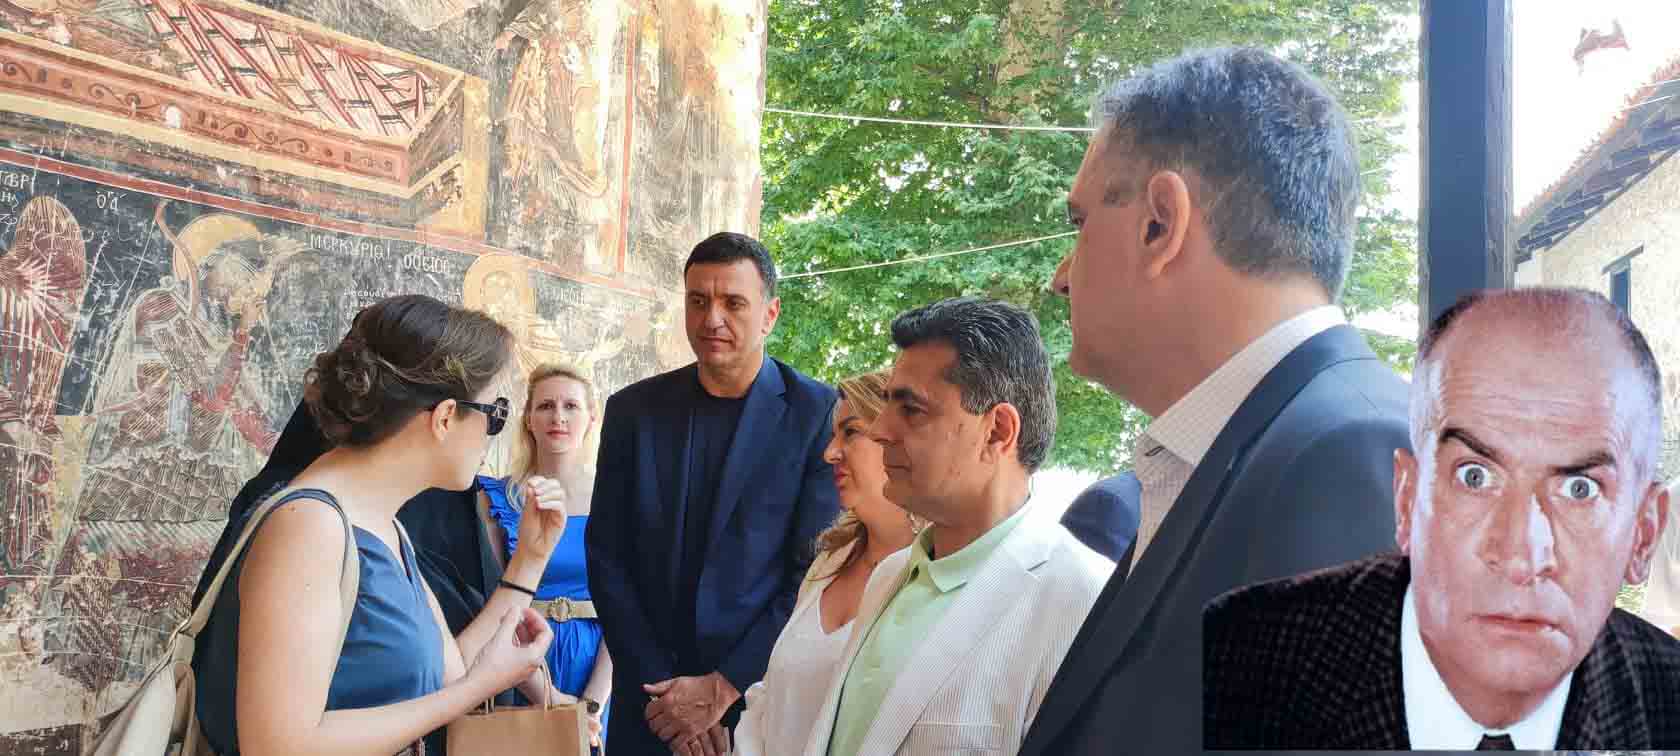  B. Κικίλιας από Καστοριά: Δε θα φτάνουν οι κλίνες από τους πολλούς επισκέπτες